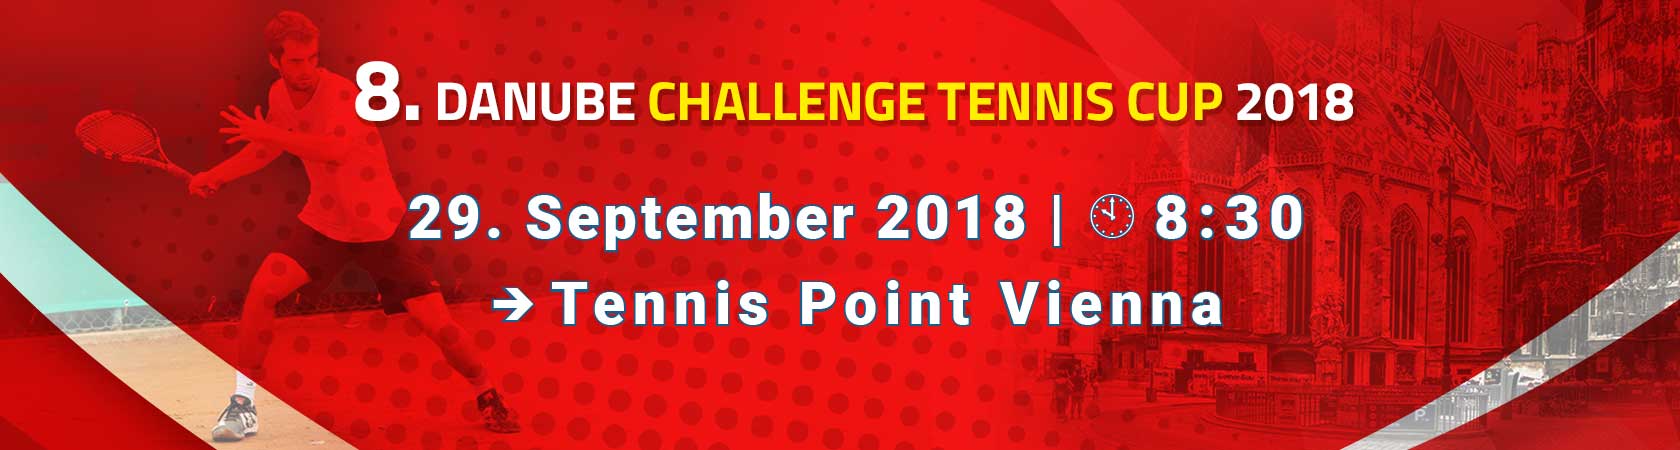 8. Danube Challenge Tennis Cup 2018 Viedeň 